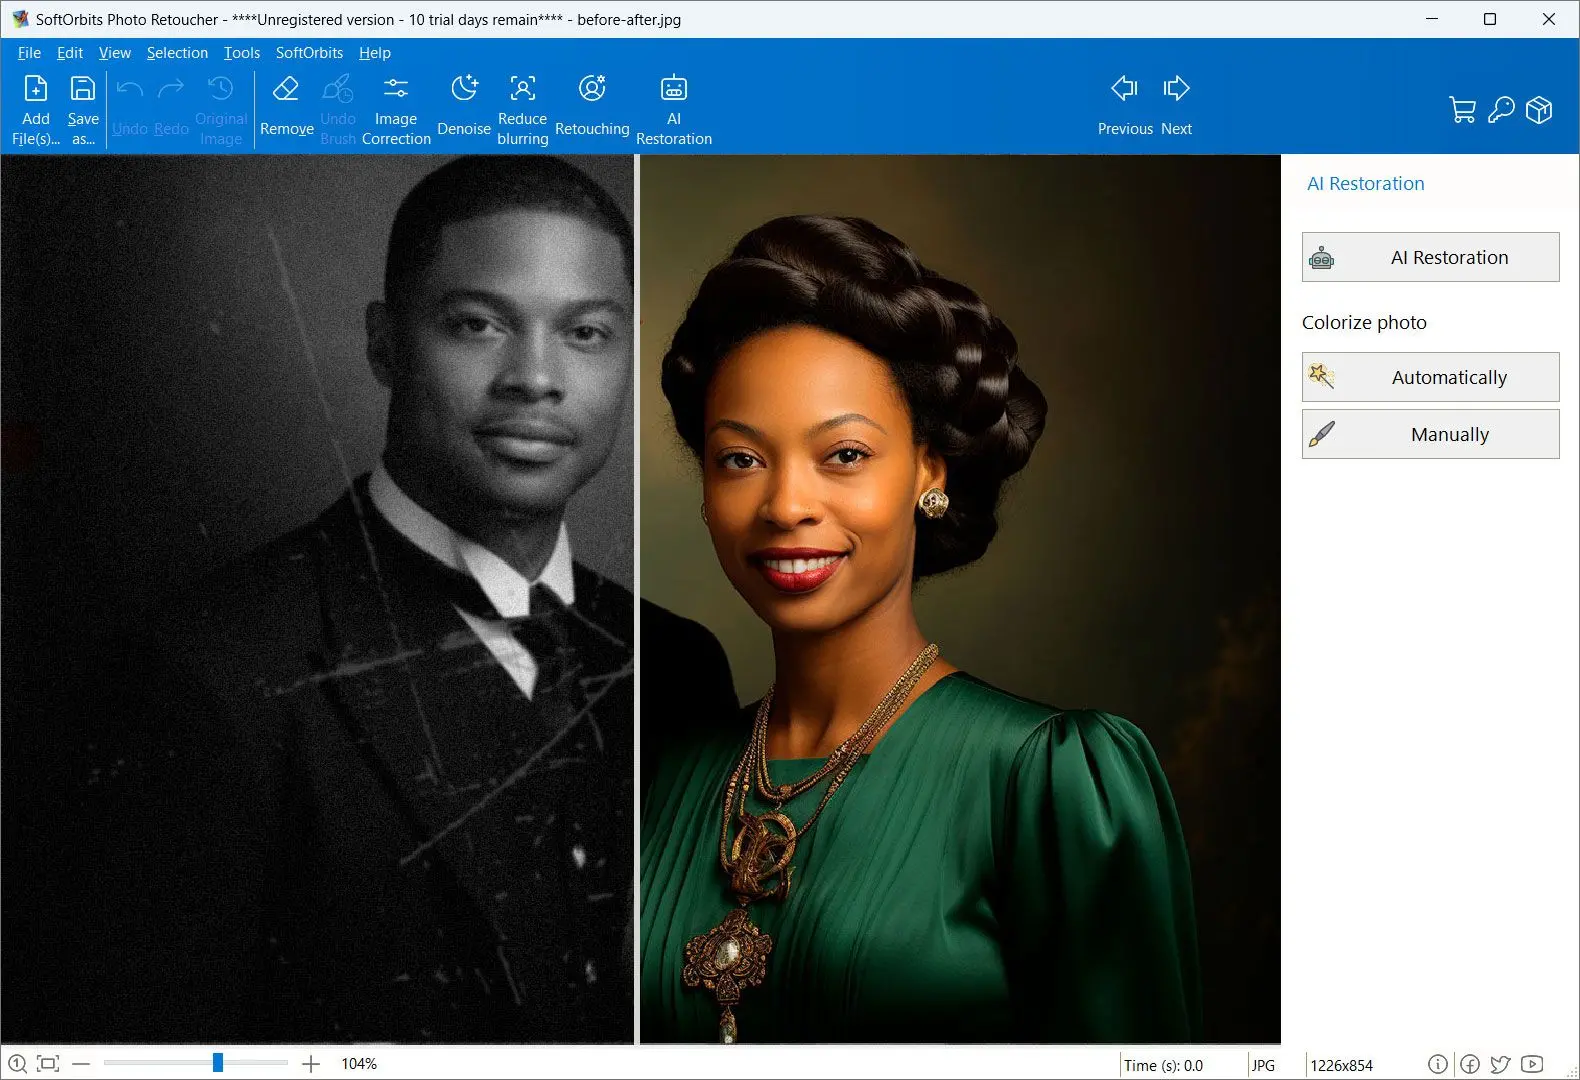 photo restoration software free download